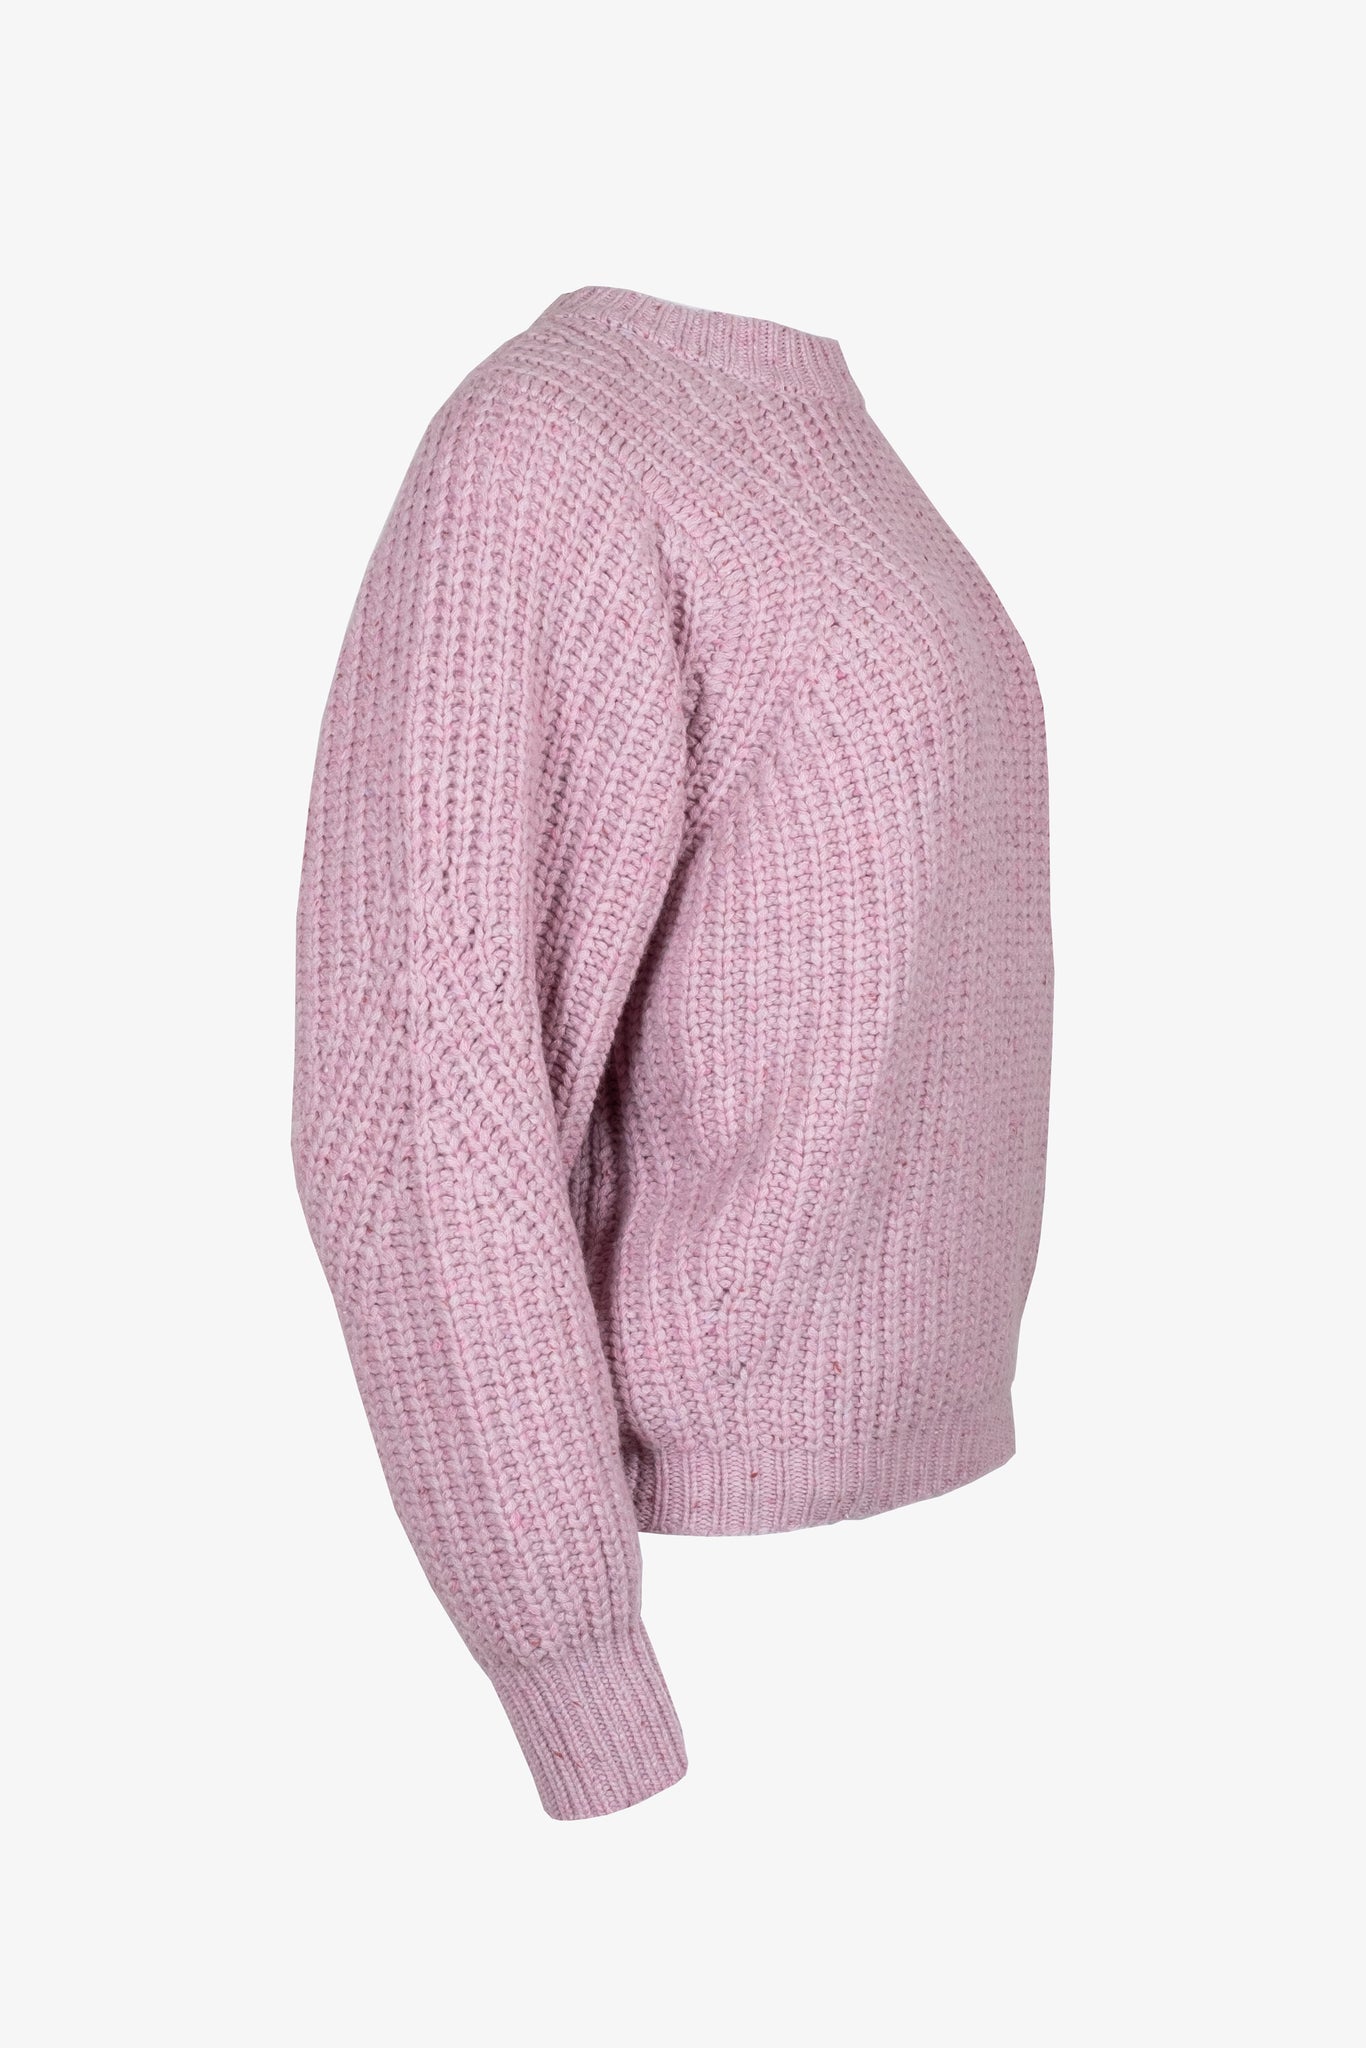 ELLA sweater